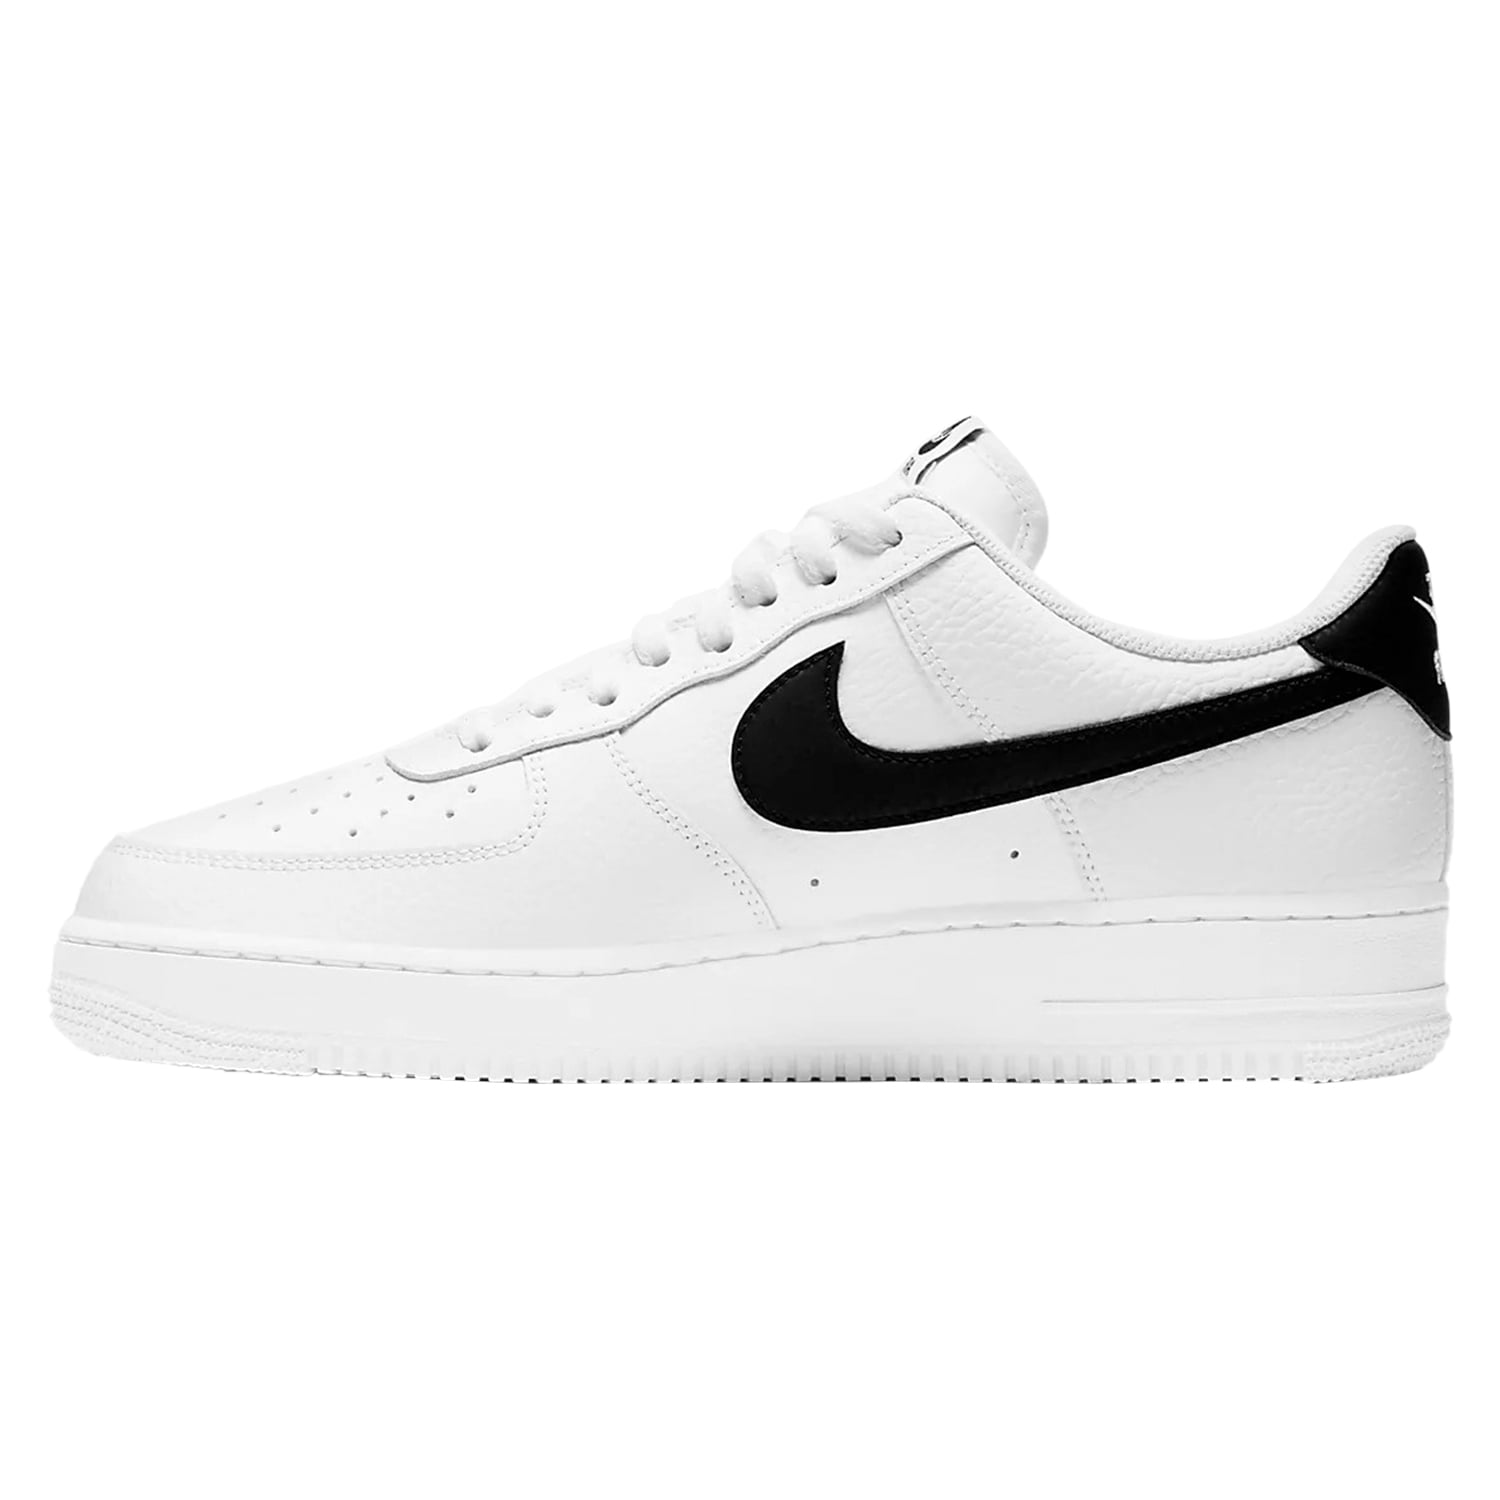 Nike Air Force 1 '07 White/Black Men's Shoe